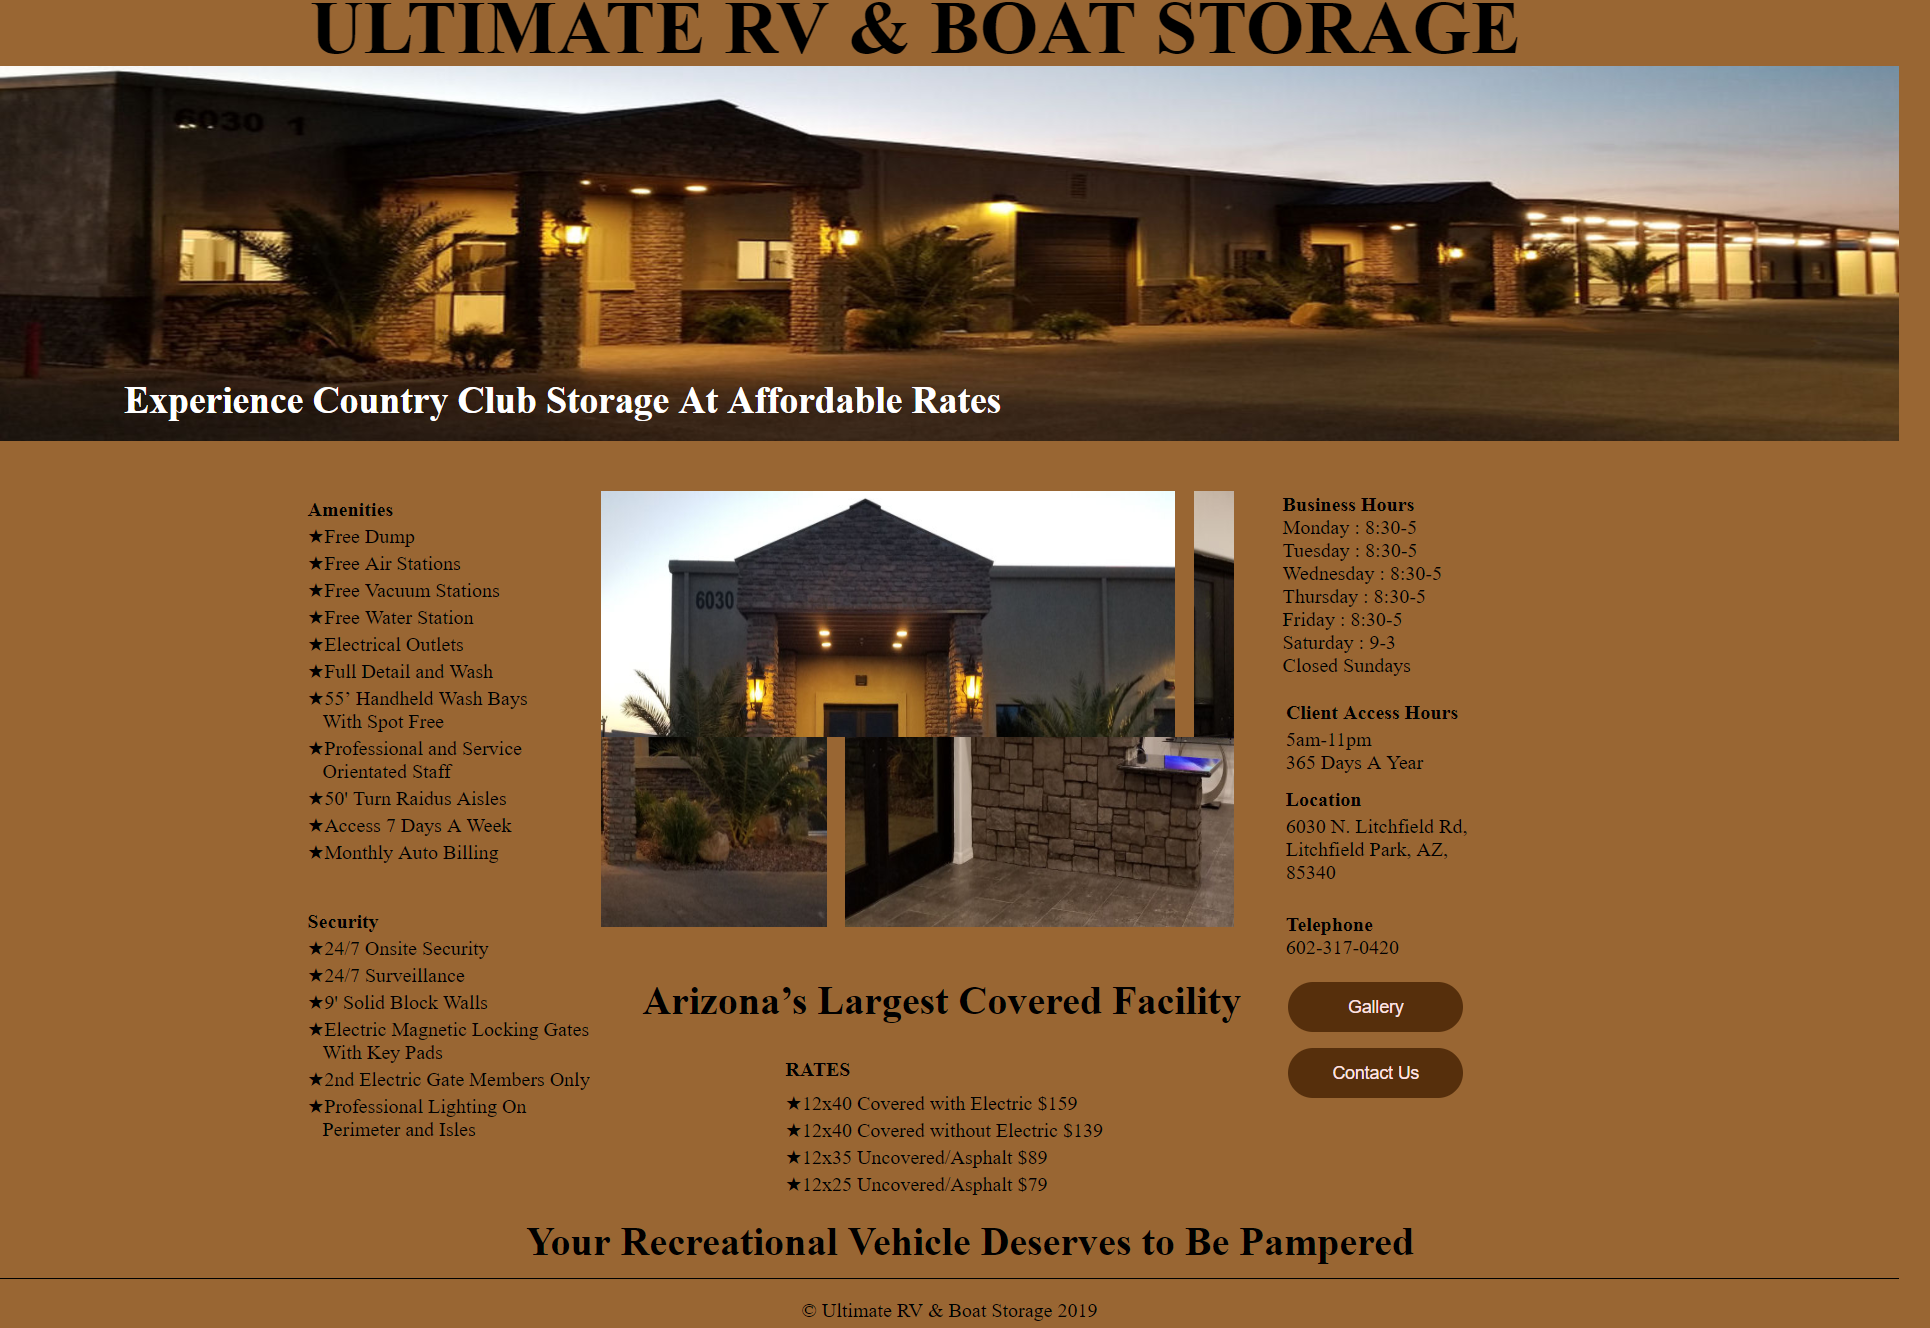 Ultimate RV & Boat Storage